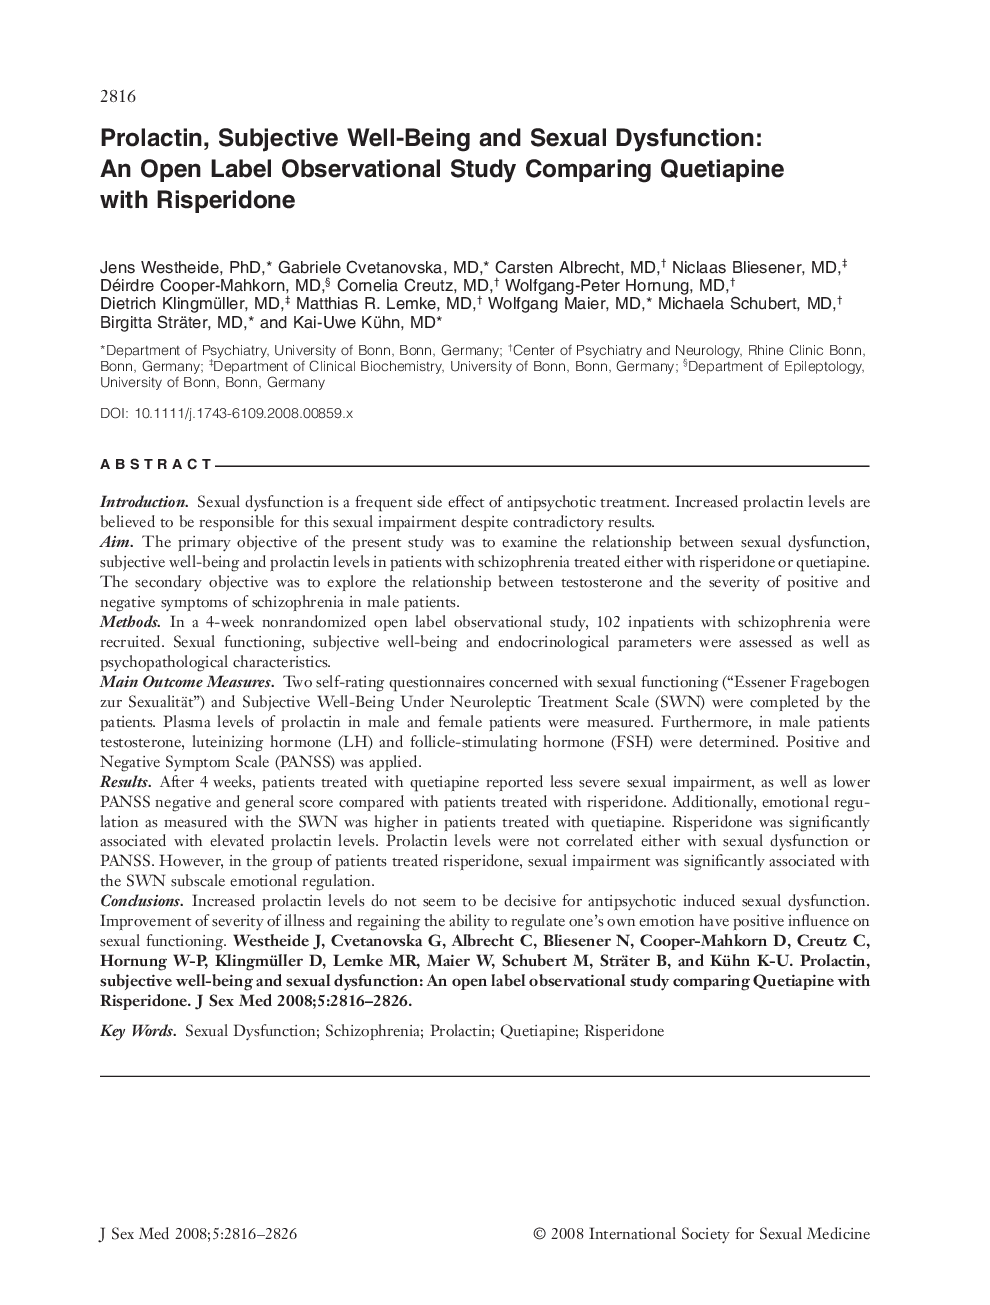 Prolactin, Subjective WellâBeing and Sexual Dysfunction: An Open Label Observational Study Comparing Quetiapine with Risperidone